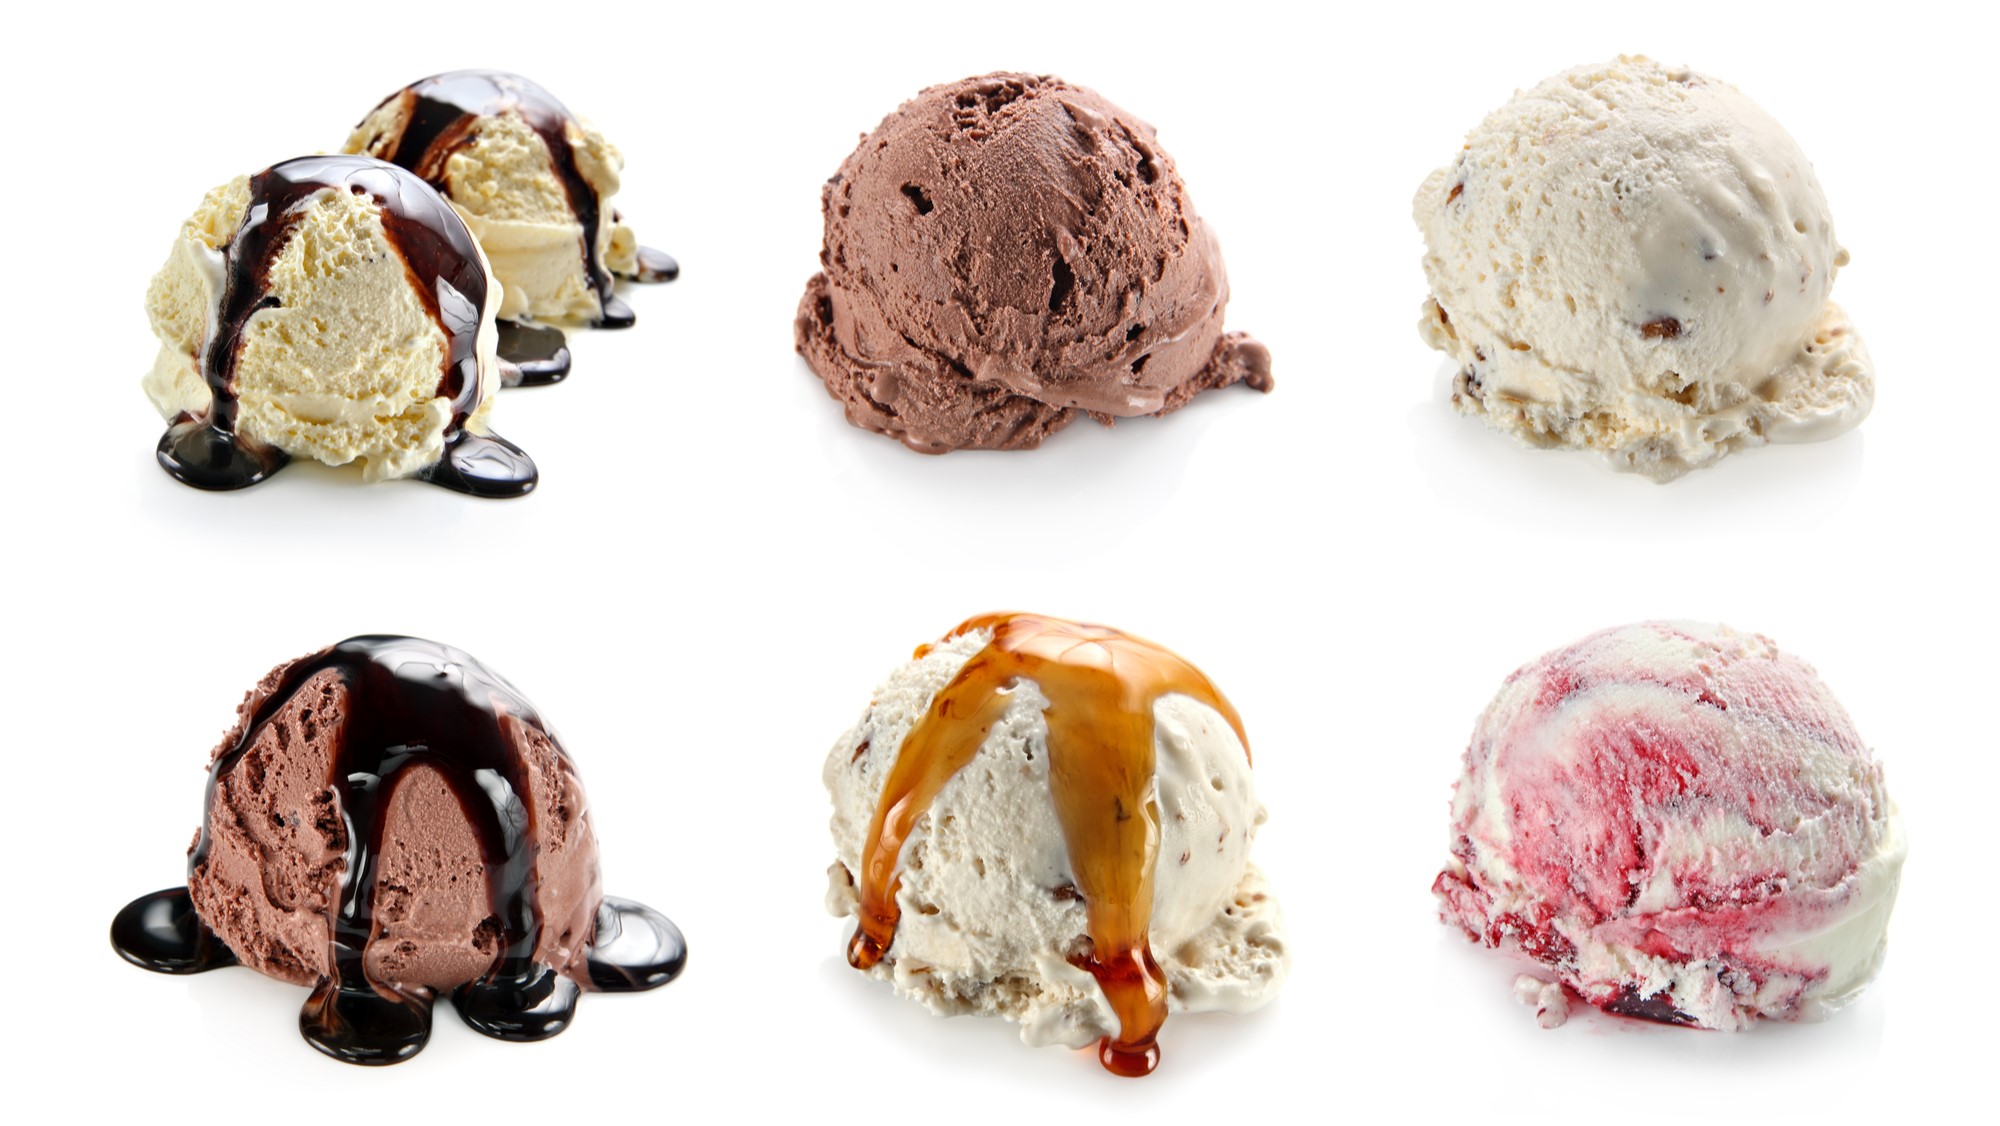 https://www.popsci.com/uploads/2023/06/30/healthiest-ice-cream.jpg?auto=webp&width=1440&height=810.72